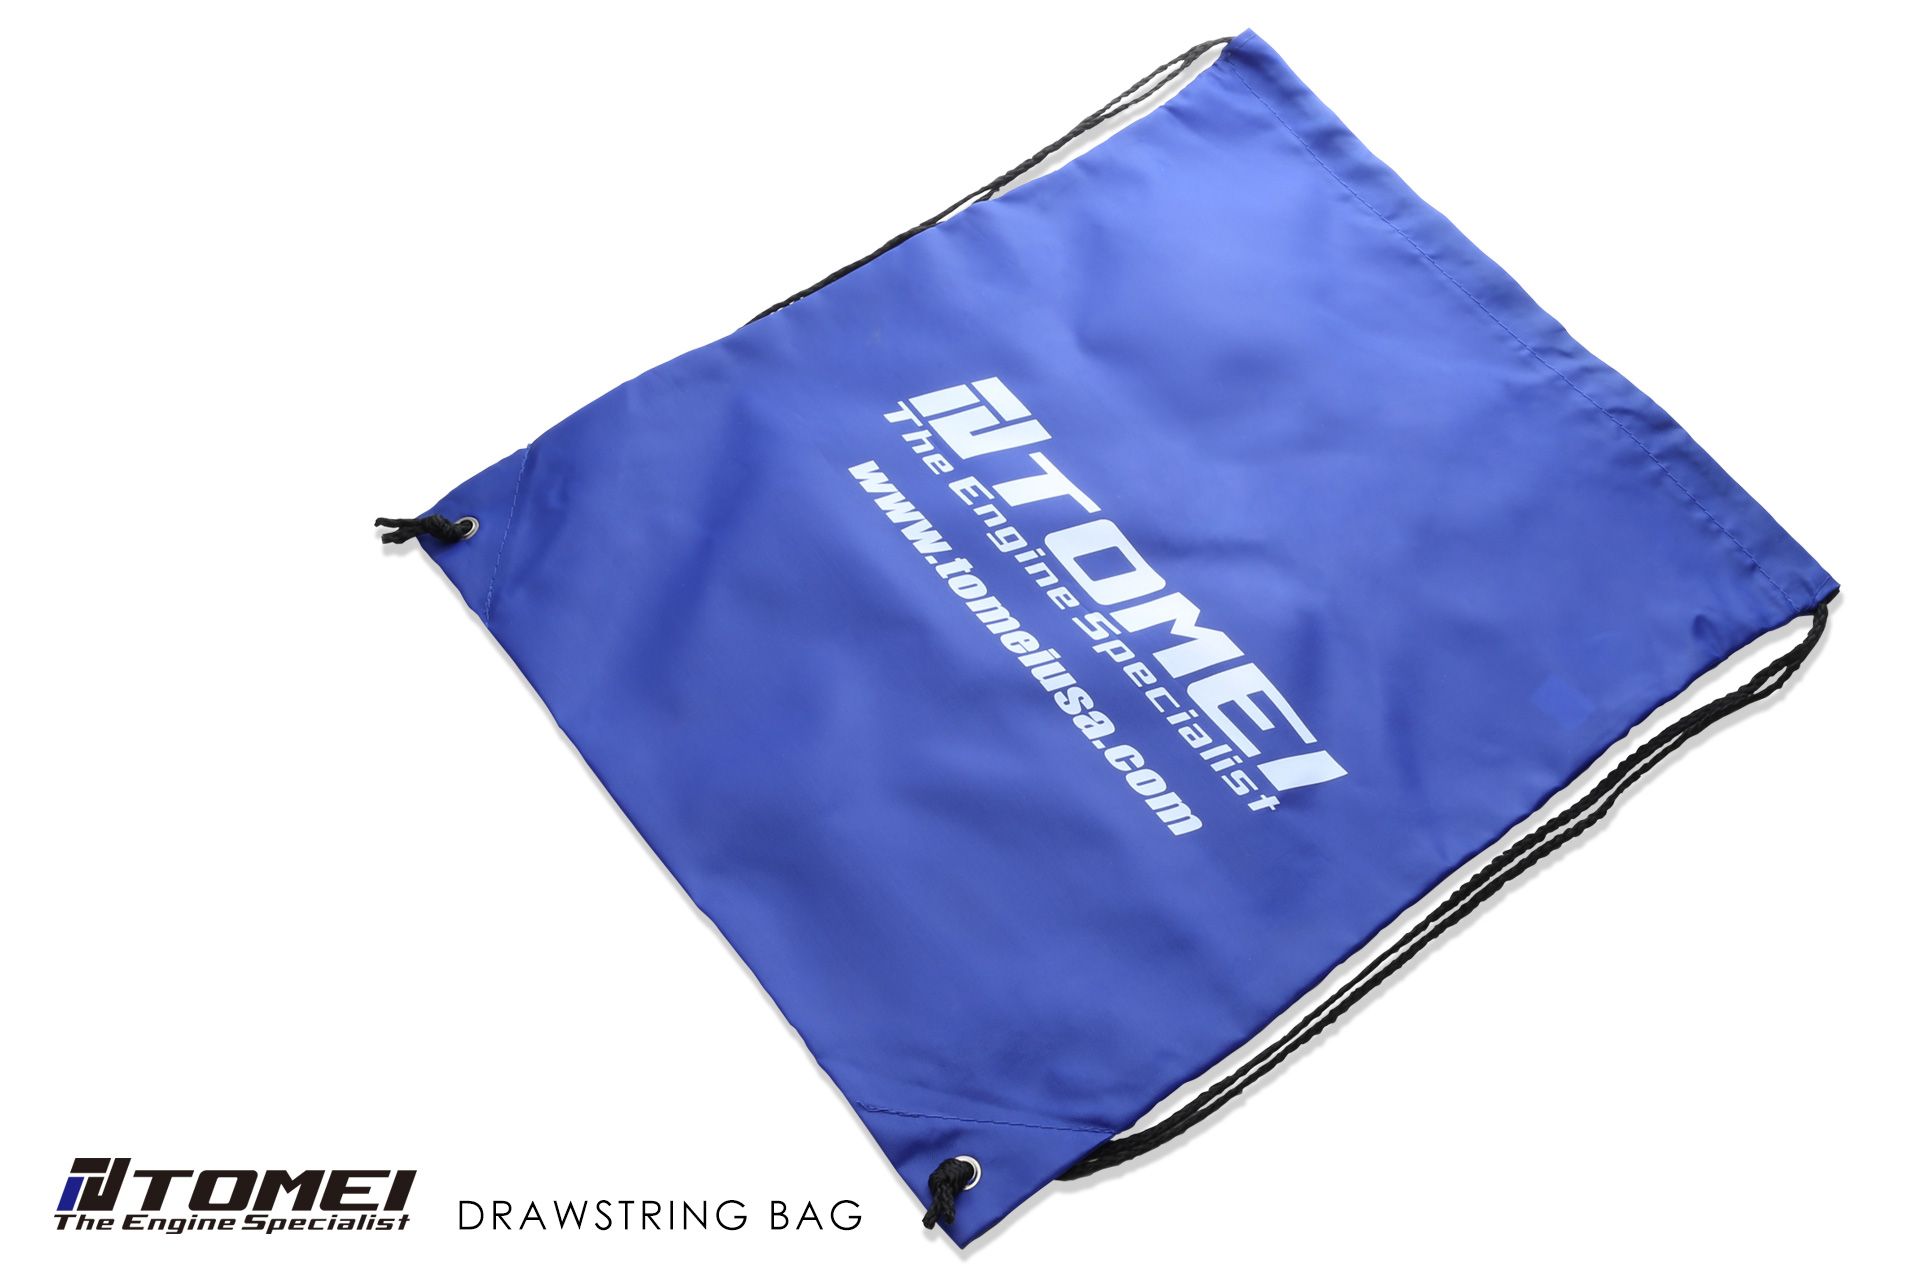 Tomei Draw-String Bag, Blue 450x370mm